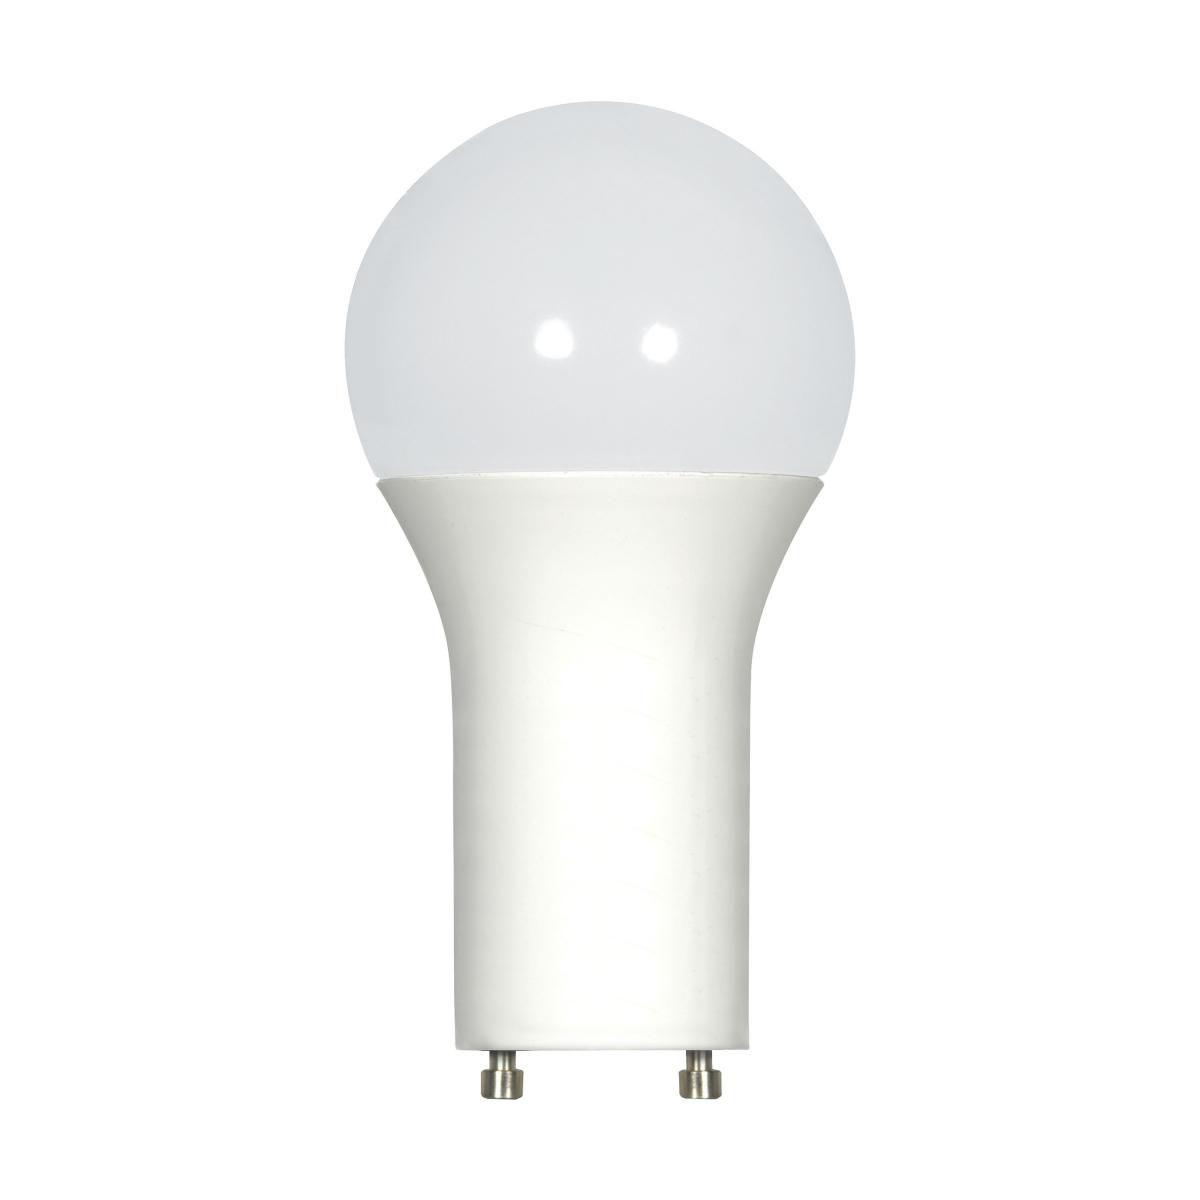 A19 LED Bulb, 100W Equivalent, 17 Watt, 1600 Lumens, 4000K, GU24 Base, Frosted Finish